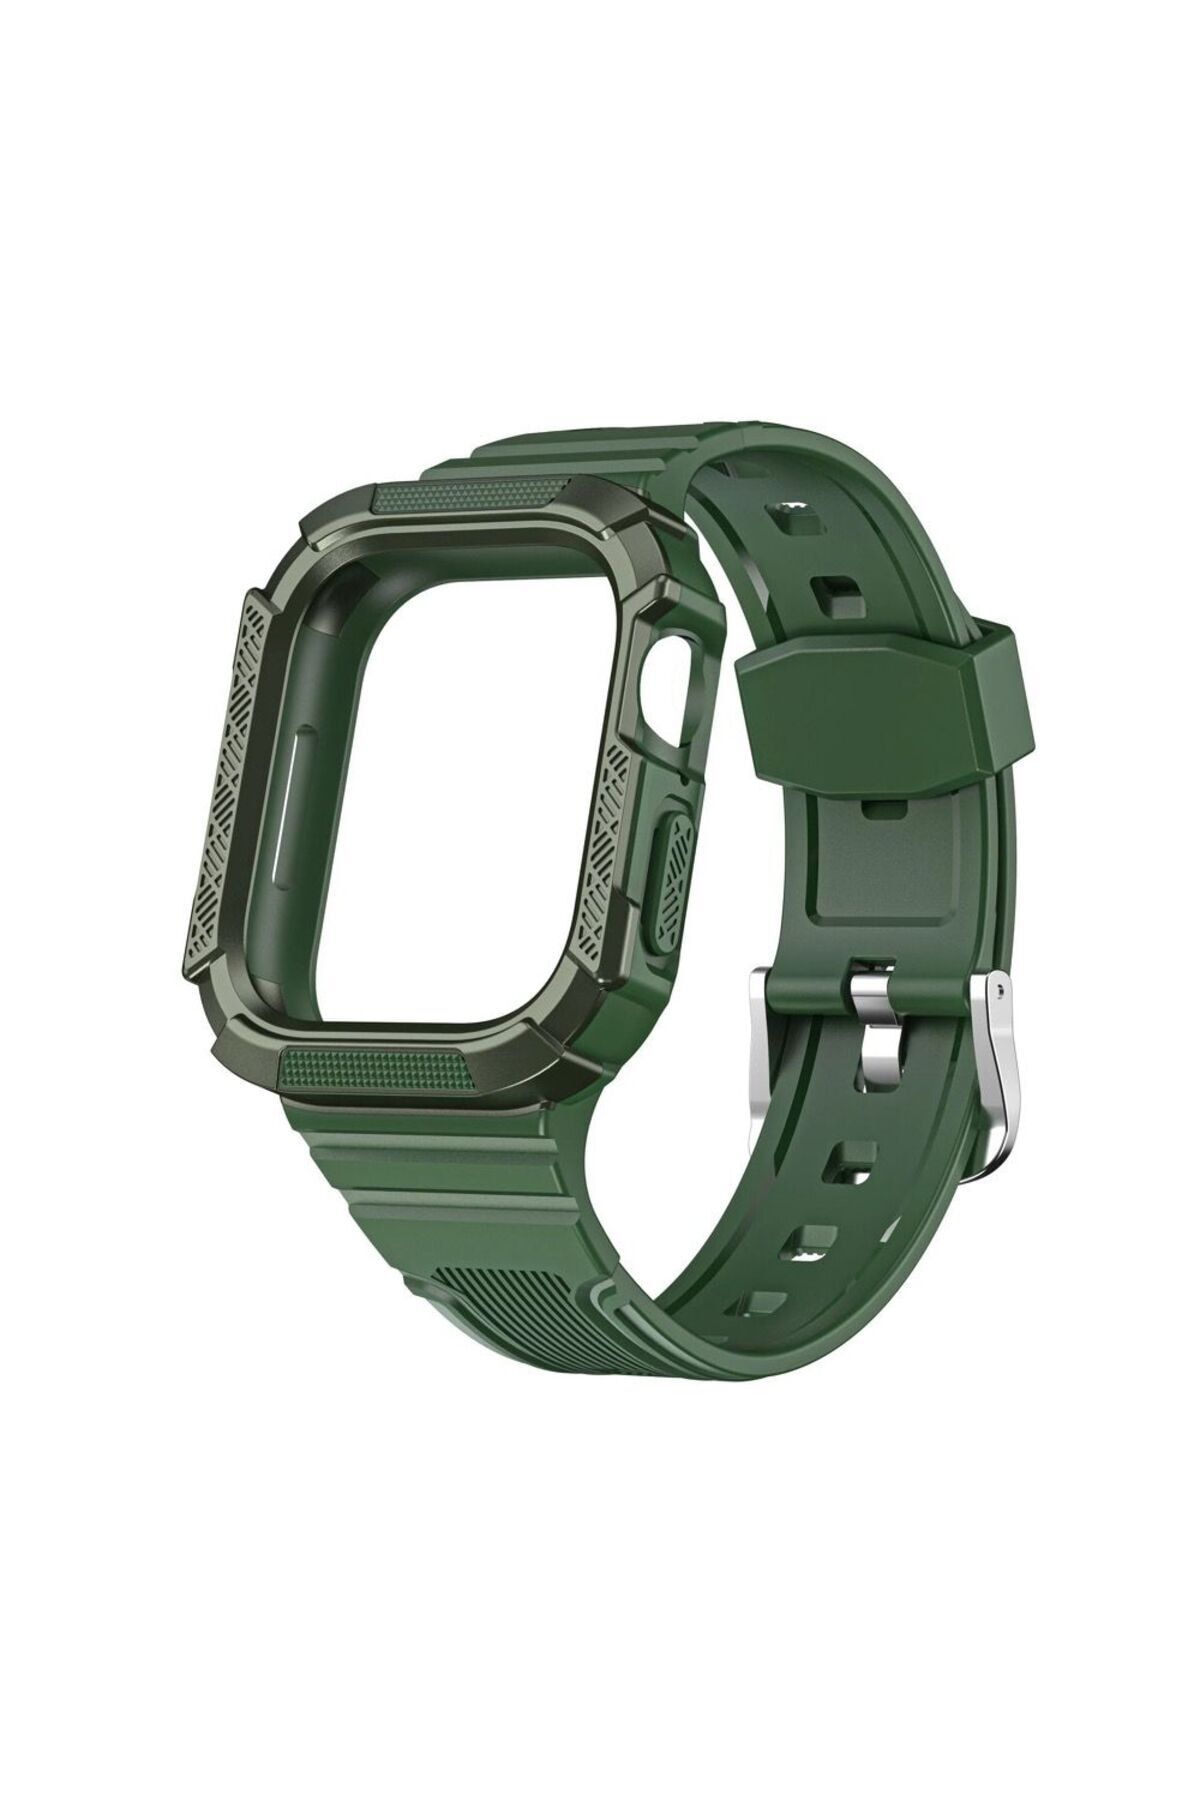 Gpack Apple Watch Series 3 4 5 40mm Kordon Defens Tank Armor Birleşik Full Koyu Yeşil